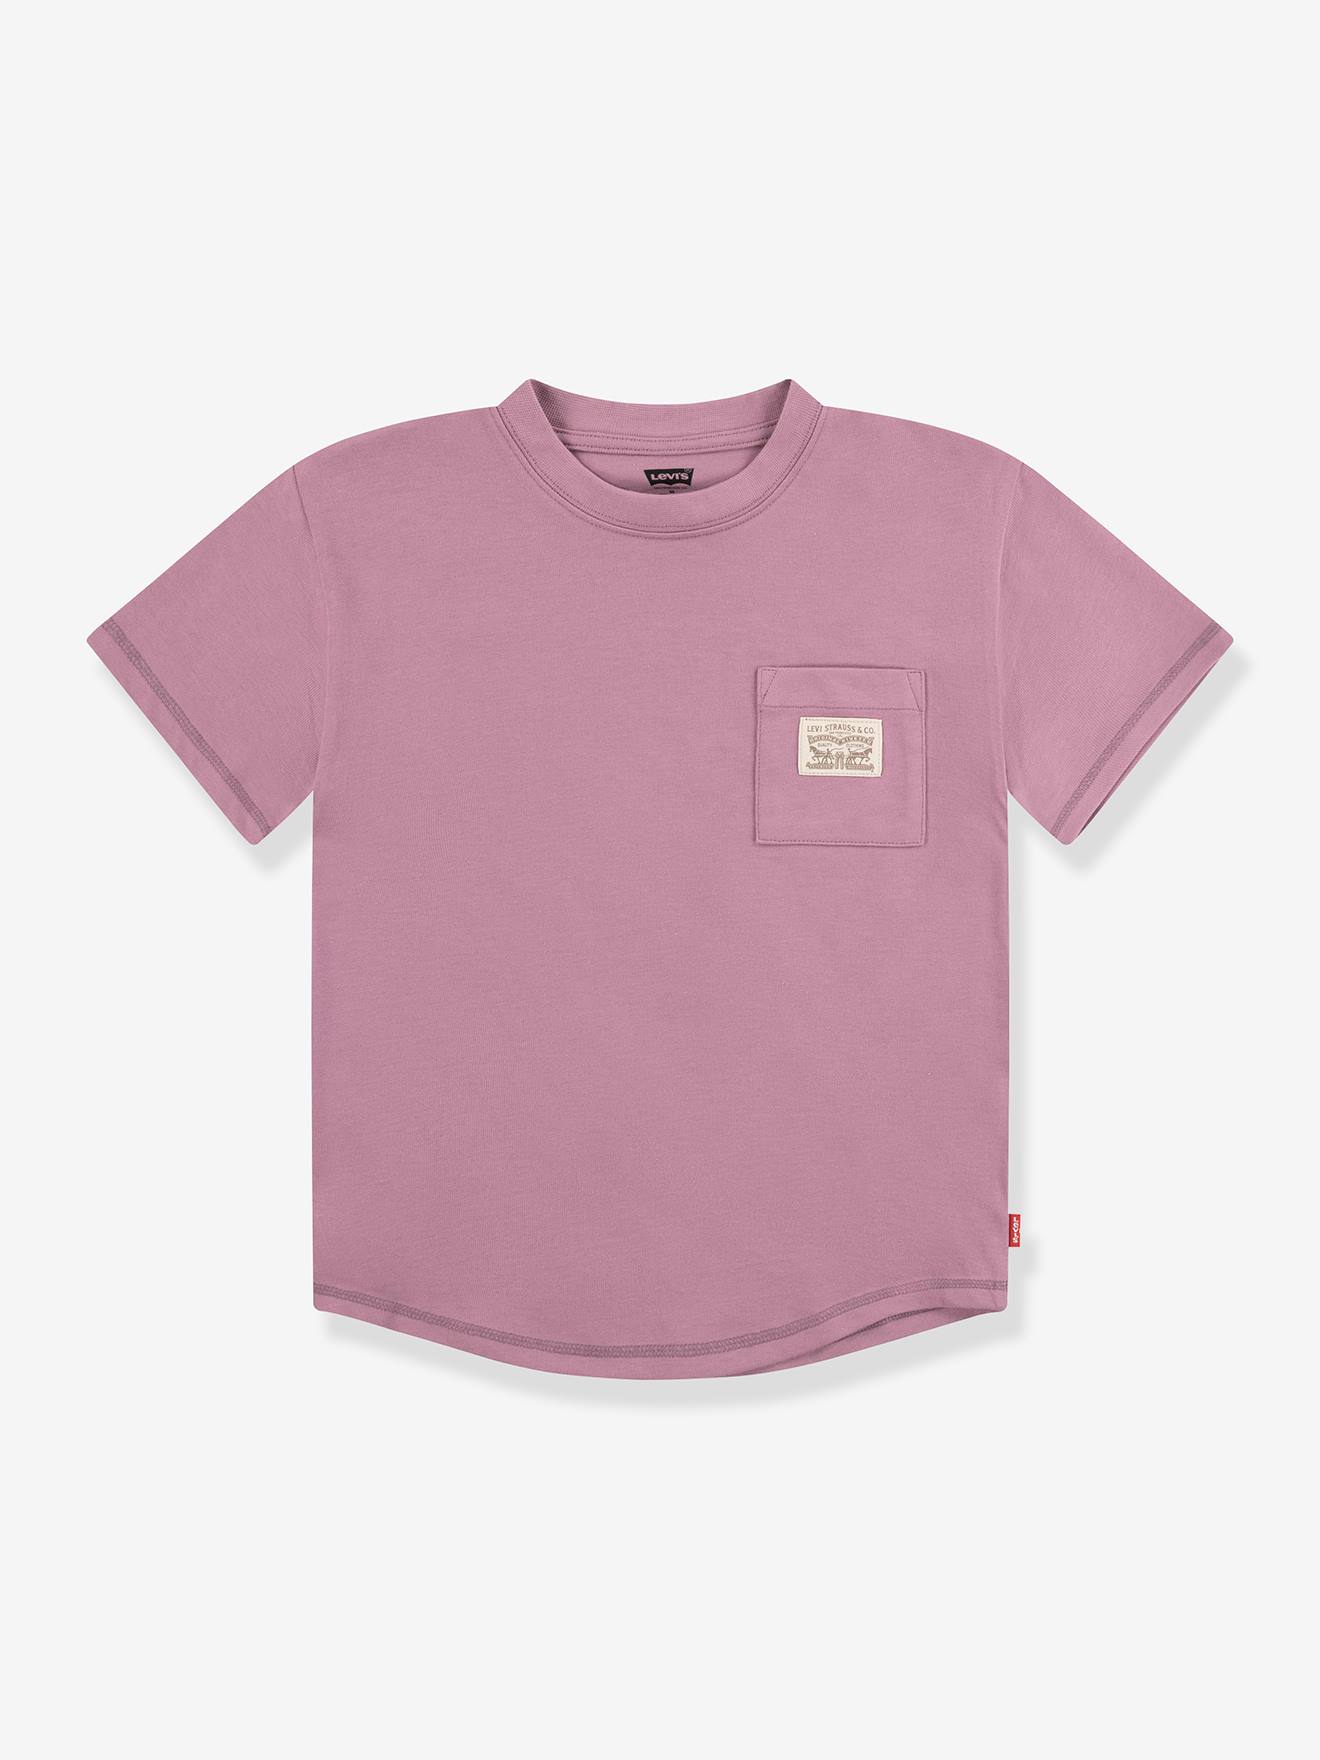 LEVIS KID'S Camiseta Levi's® con bolsillo lavanda